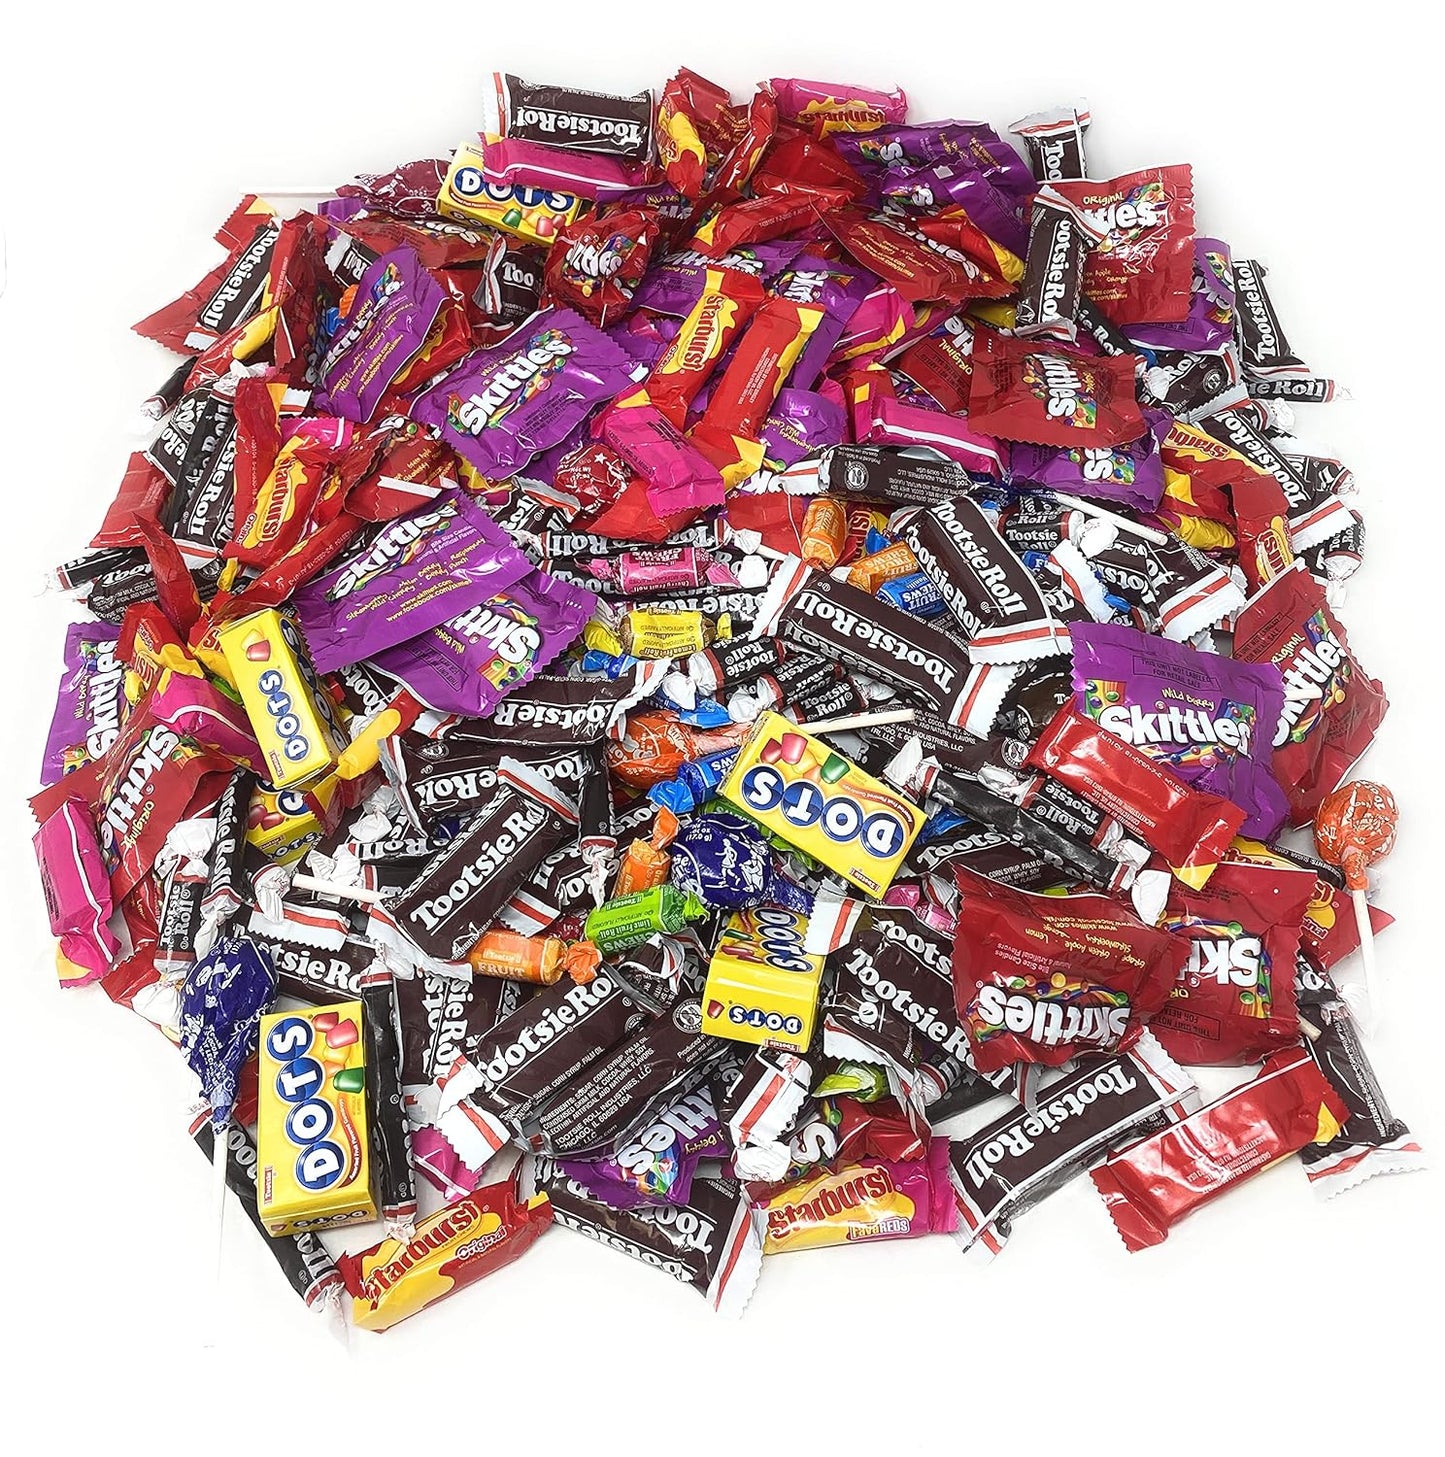 Assorted Bulk American Candy 11.25 Lb Starbursts FaveReds, Skittles Original And Wild Berry Tootsie Rolls Juniors Tootsie Snack Bars Tootsie Mini Dots Tootsie Pops Fruit Rolls 450+ Ct (180.4 Oz)